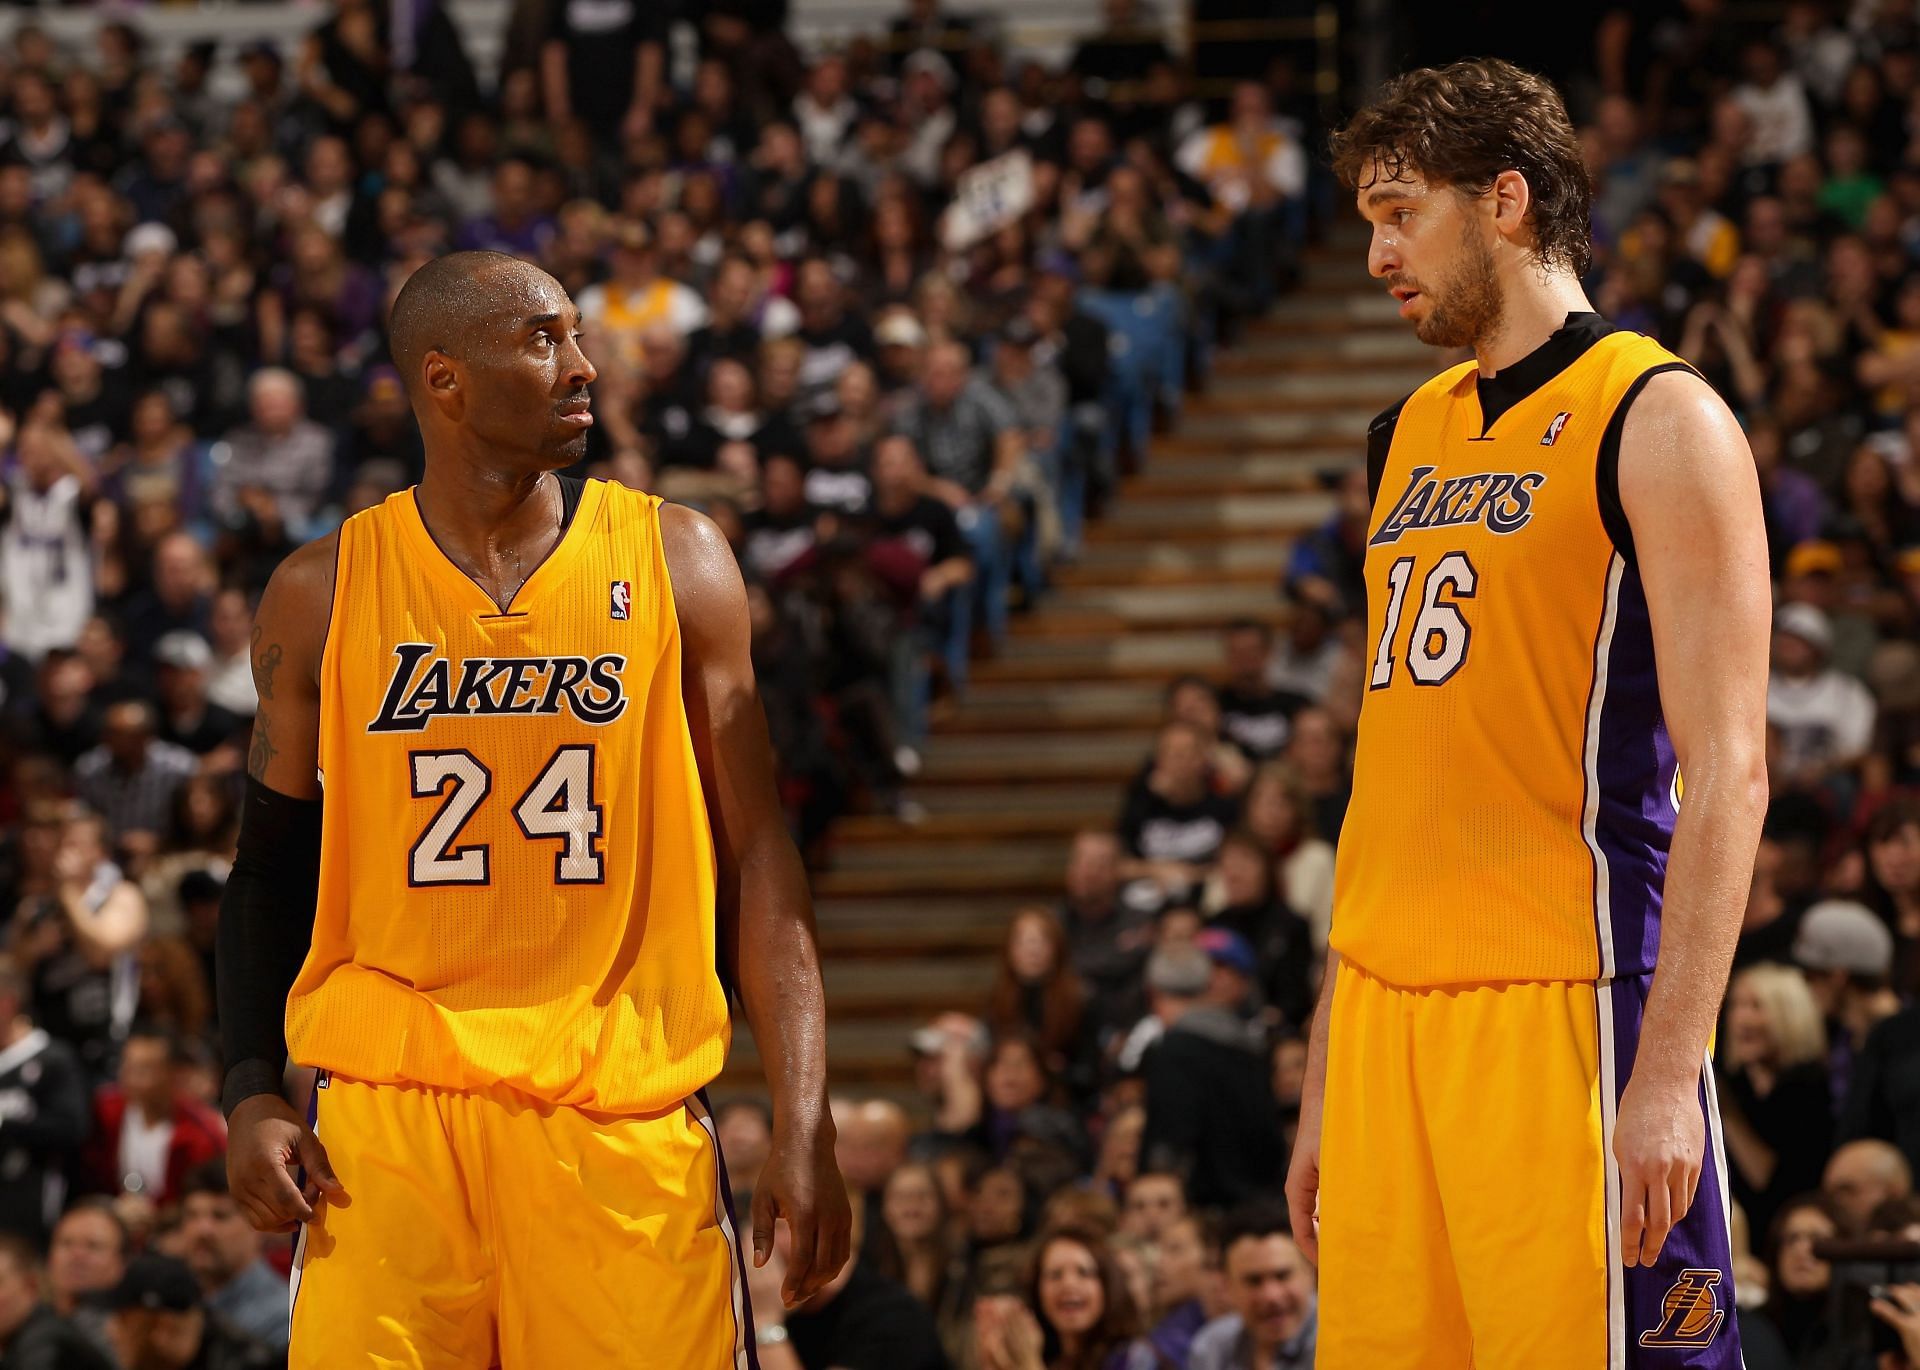 LA Lakers guard Kobe Bryant, left, and center Pau Gasol